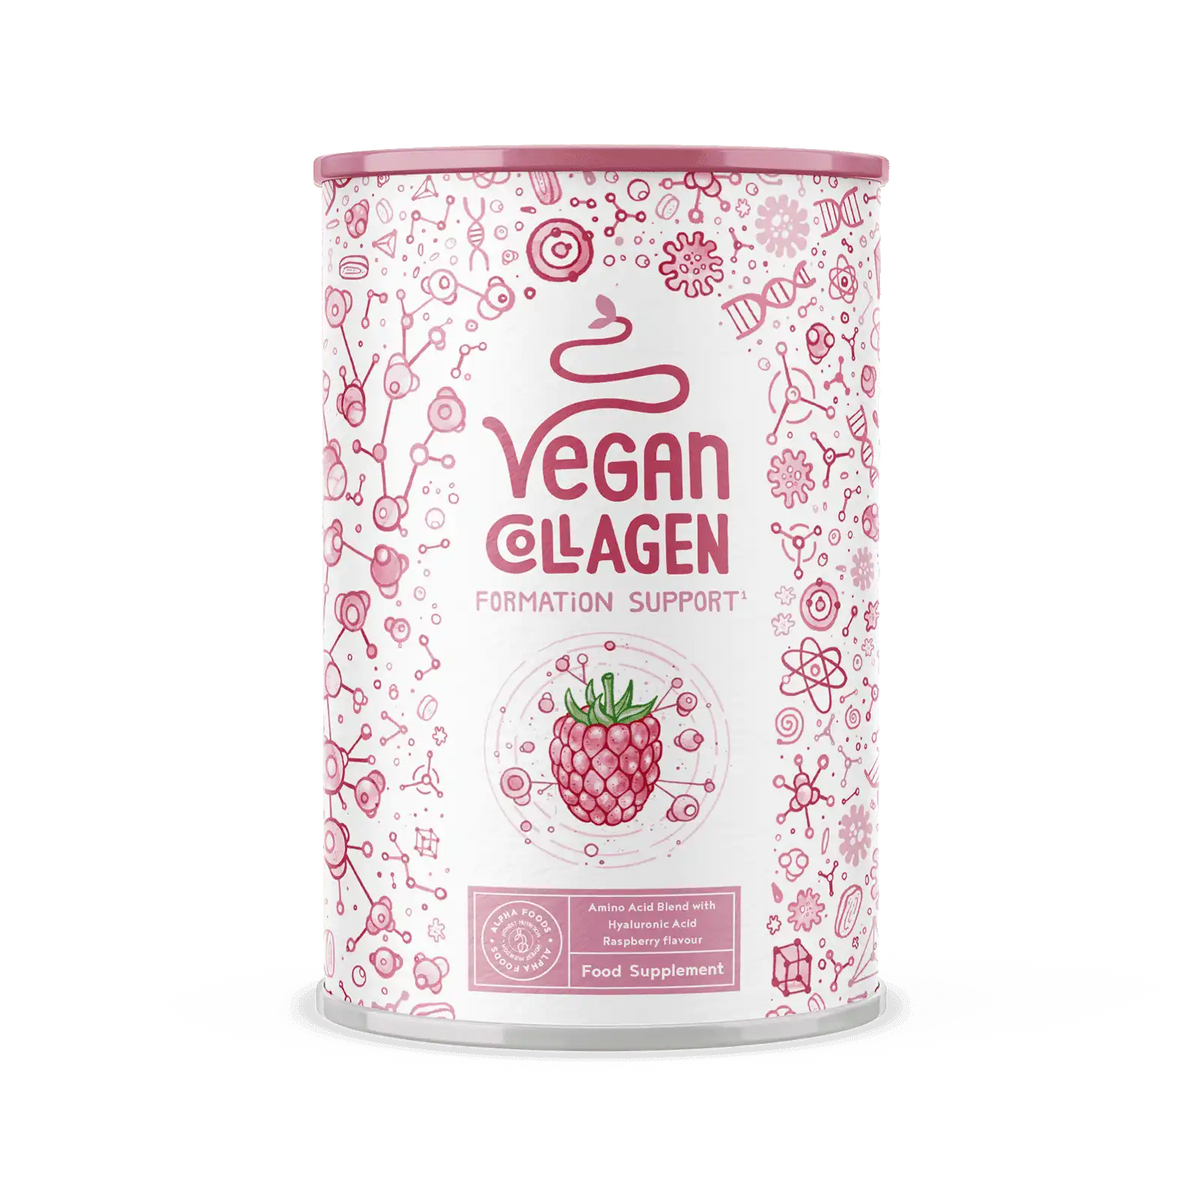 Vegan Collagen Formation Support - Himbeere